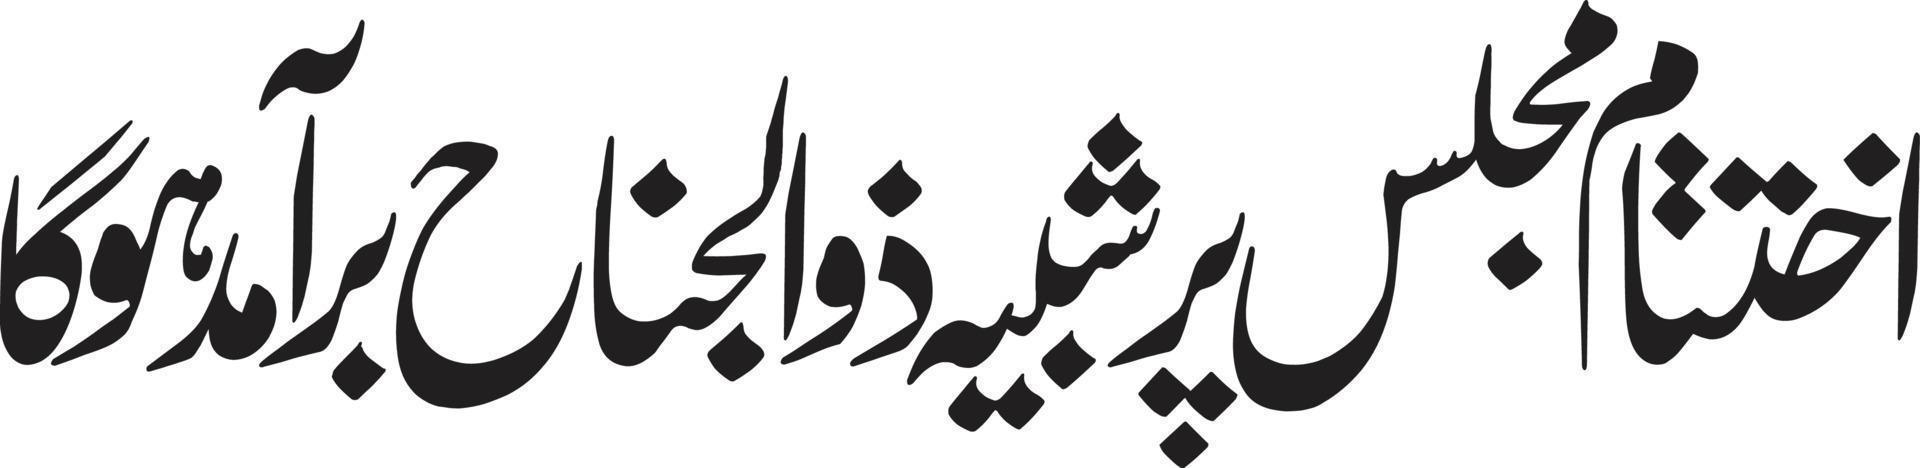 Ikhtamam  Mejless Pur islamic urdu calligraphy Free Vector